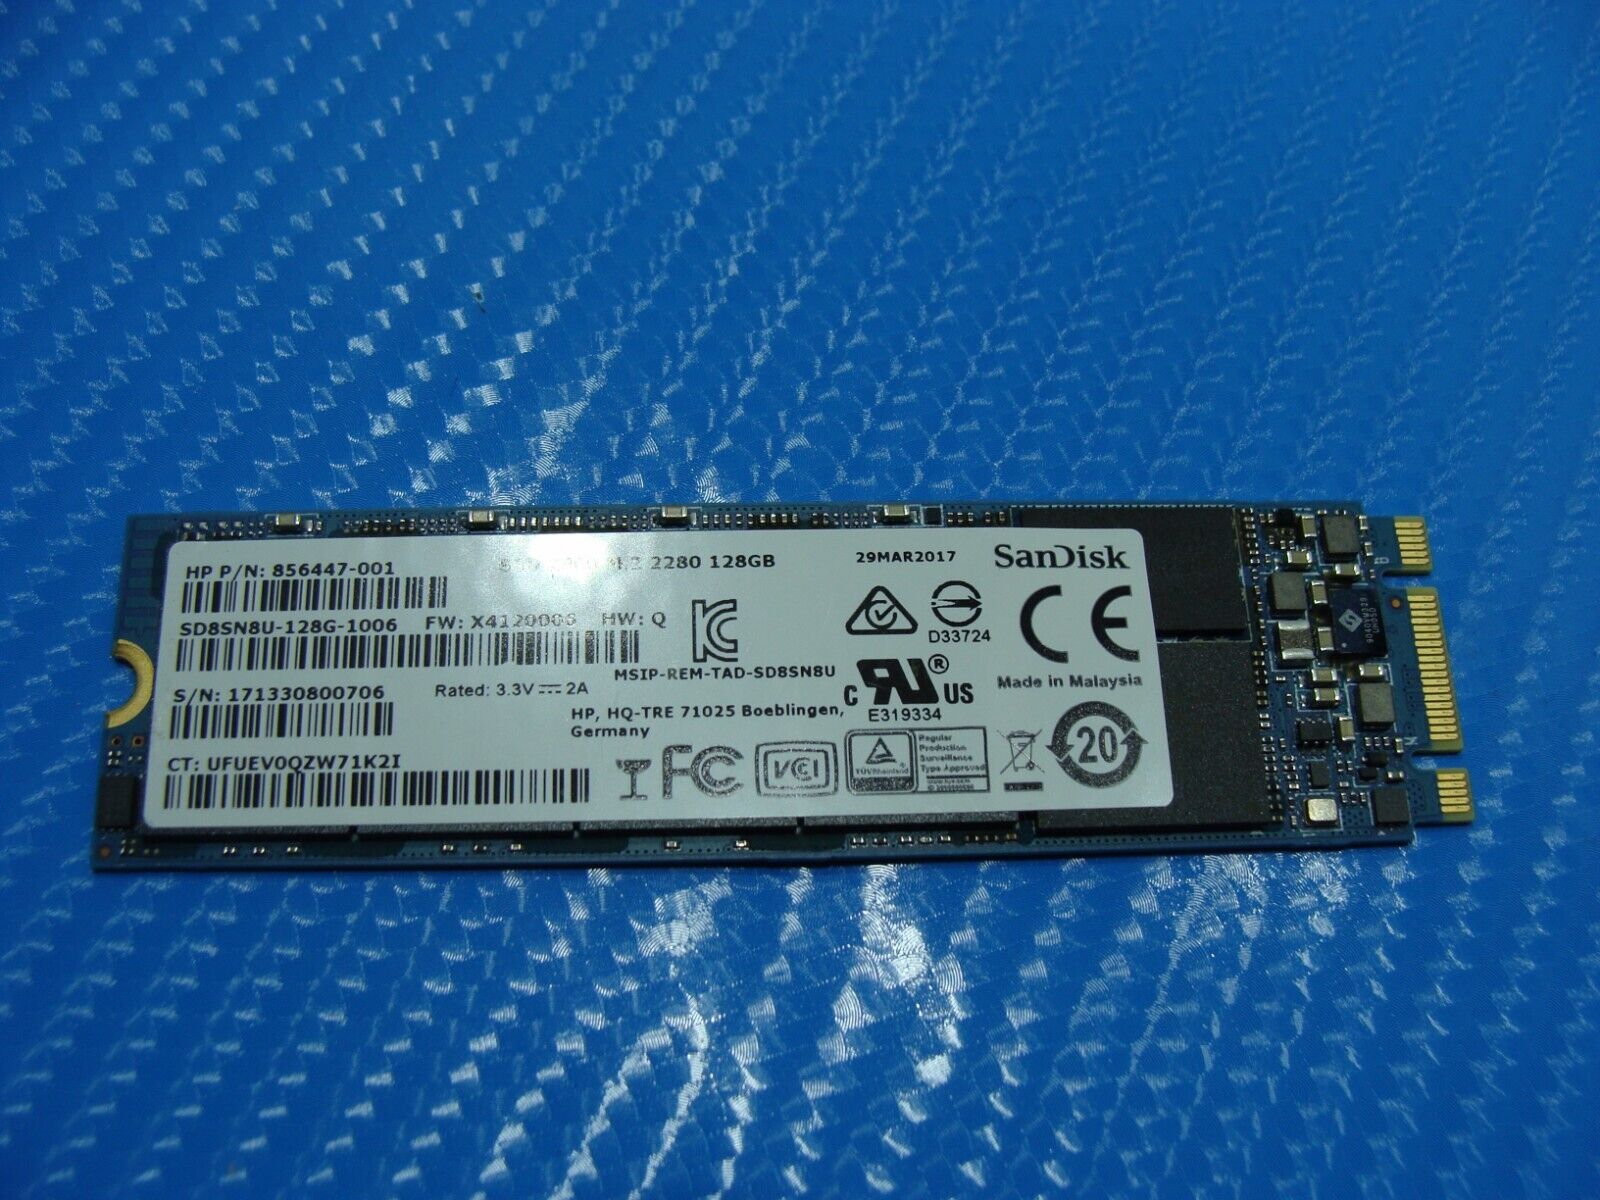 HP 14m-ba011dx SanDisk 128GB M.2 SATA SSD Solid State Drive SD8SN8U-128G-1006